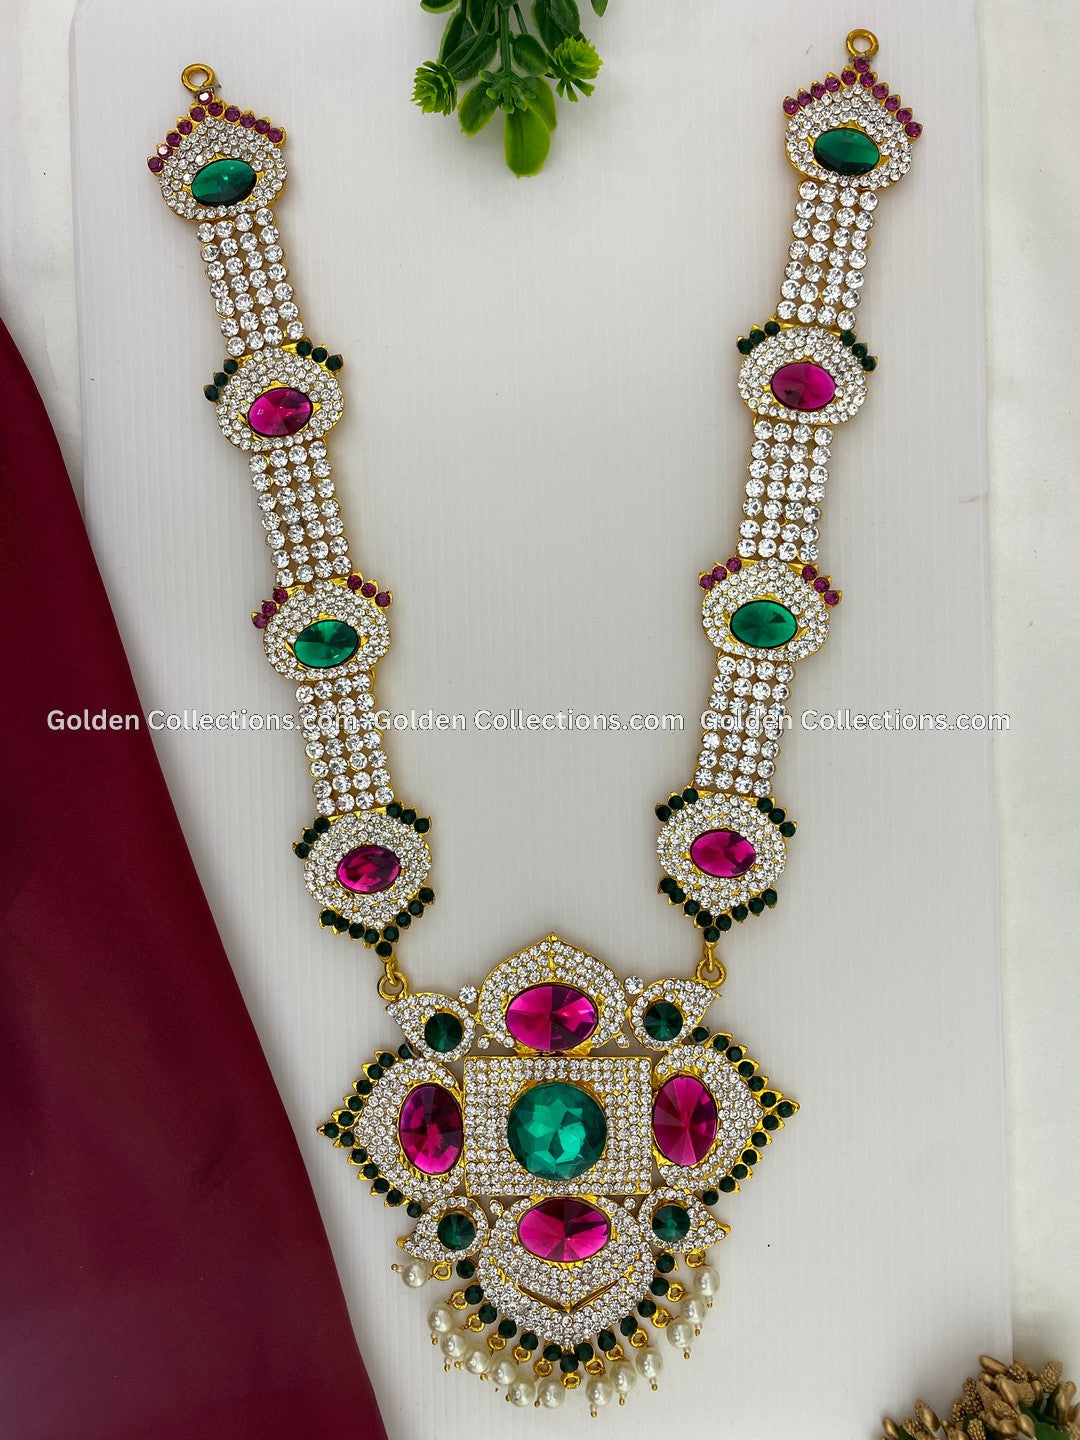 Stunning Beauty - Goddess Lakshmi Jewellery - GoldenCollections